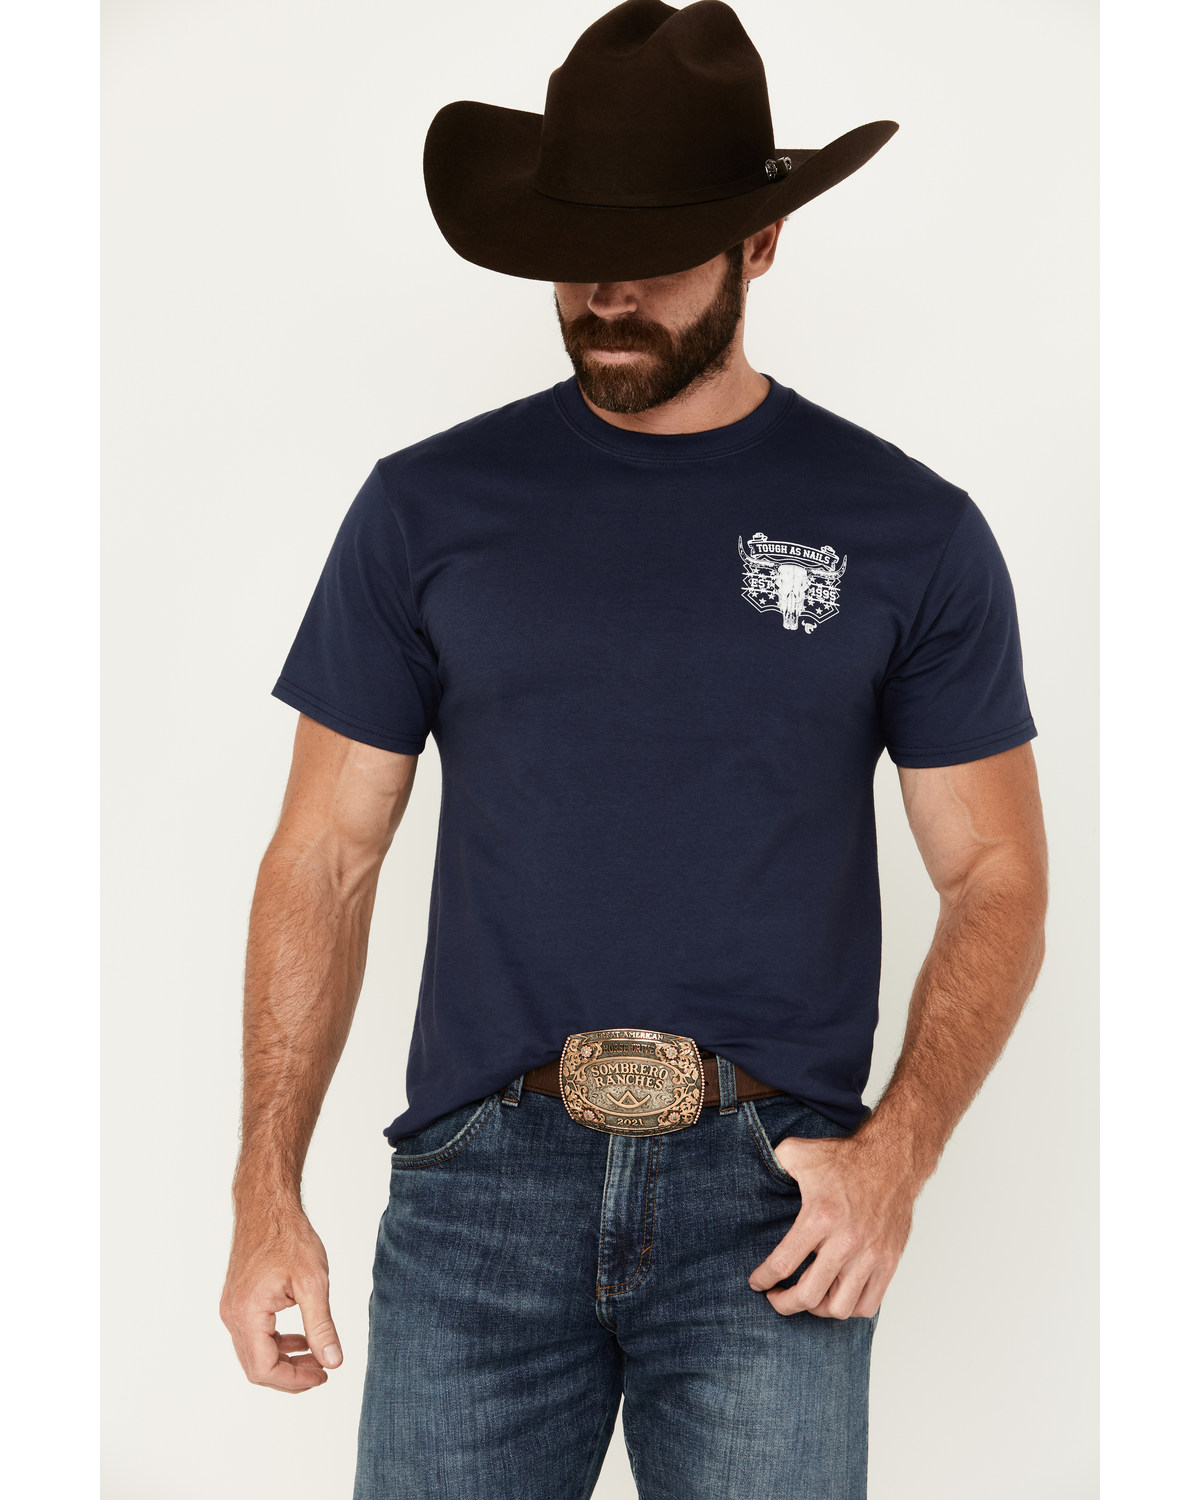 Cowboy Hardware Men's Tough As Nails Short Sleeve Graphic T-Shirt